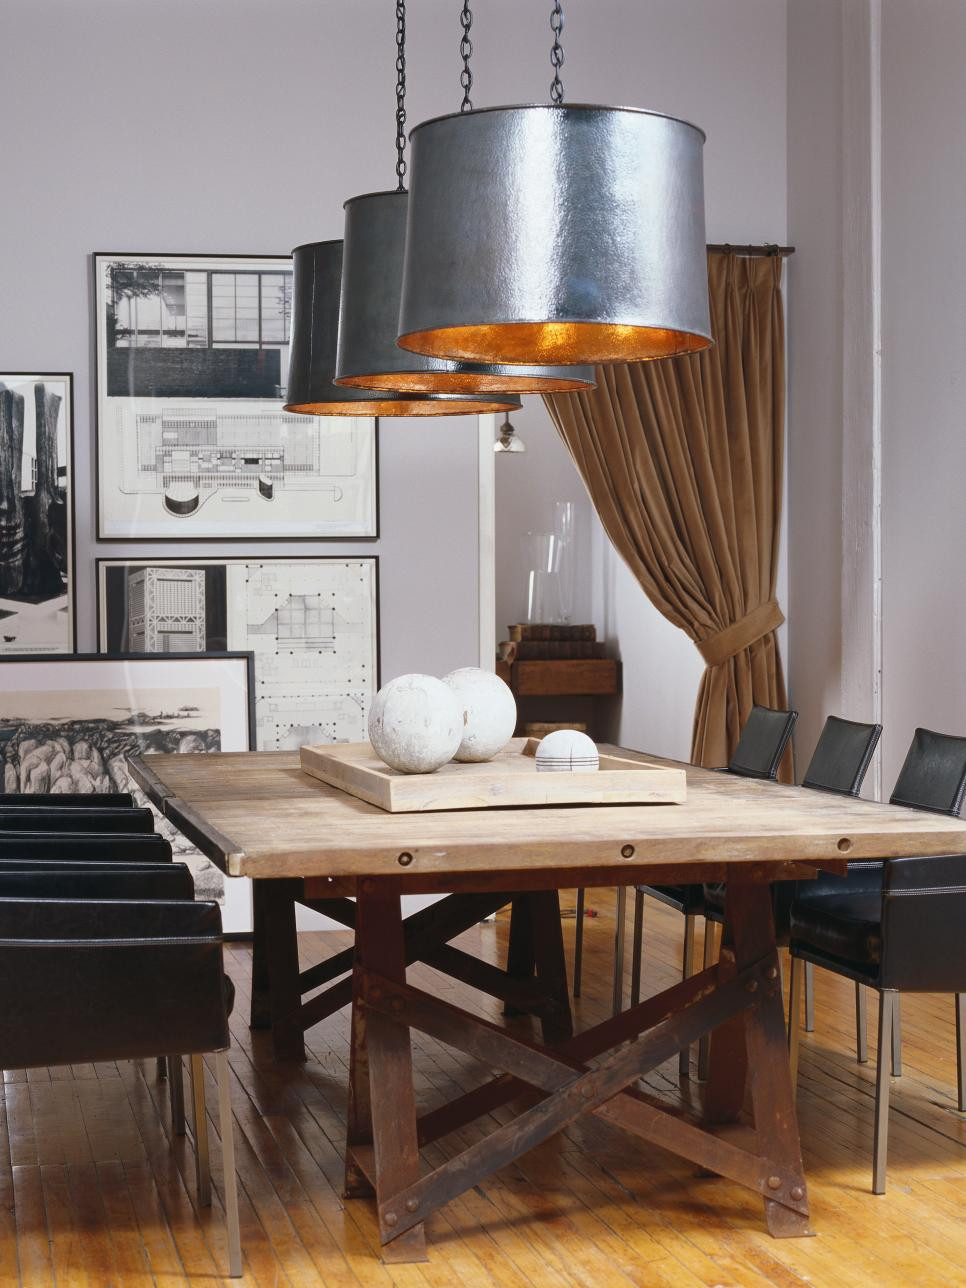 Captivating Rustic Dining Room Designs 25 Rustic Dining Room Design Ideas Decoration Love